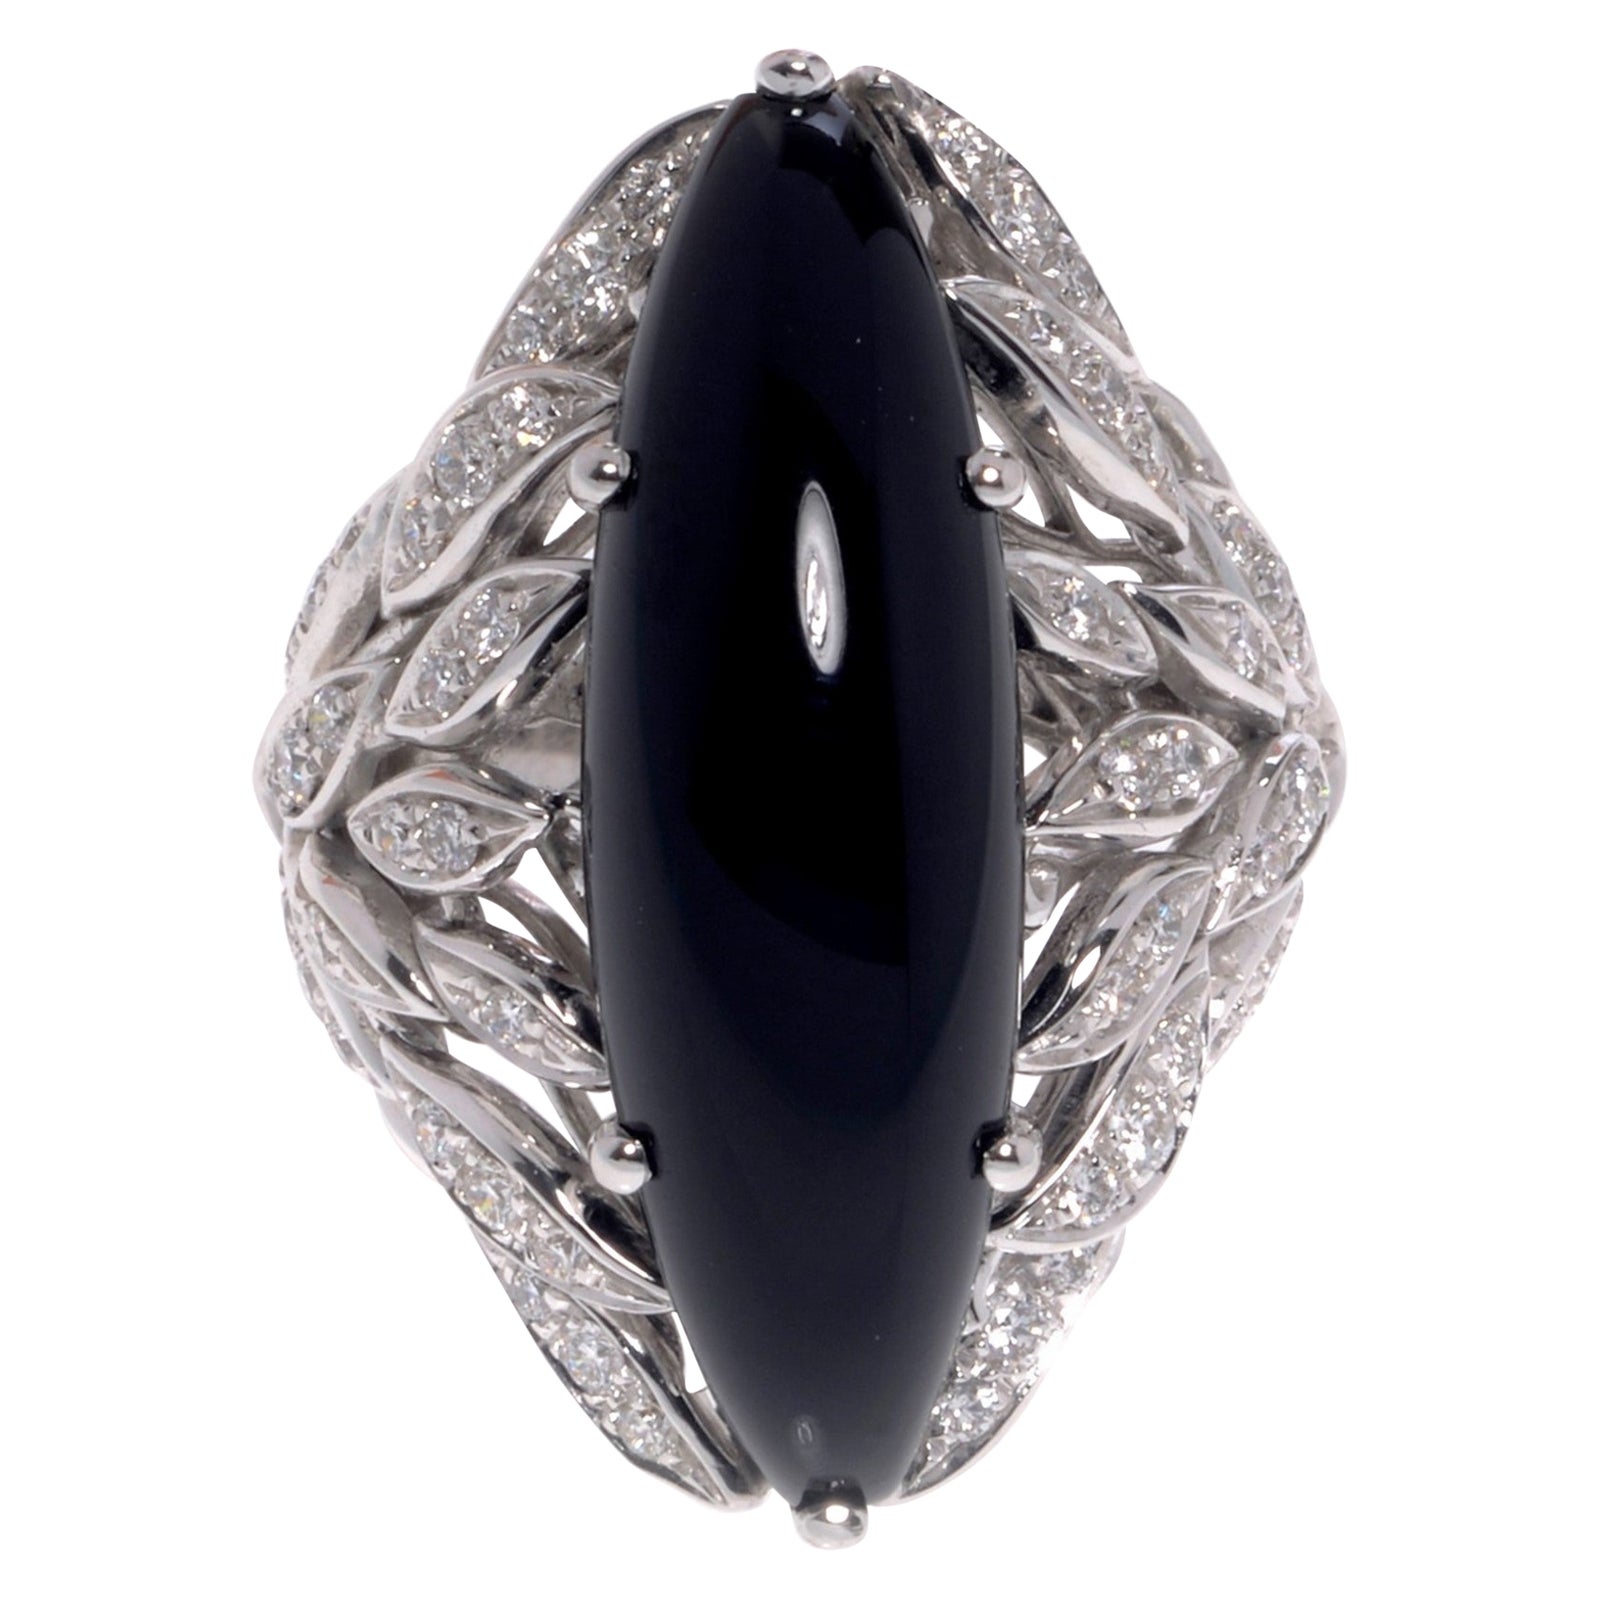 Luca Carati Black Onyx Diamond Cocktail Ring 18K White Gold 0.79Cttw Size 6.5